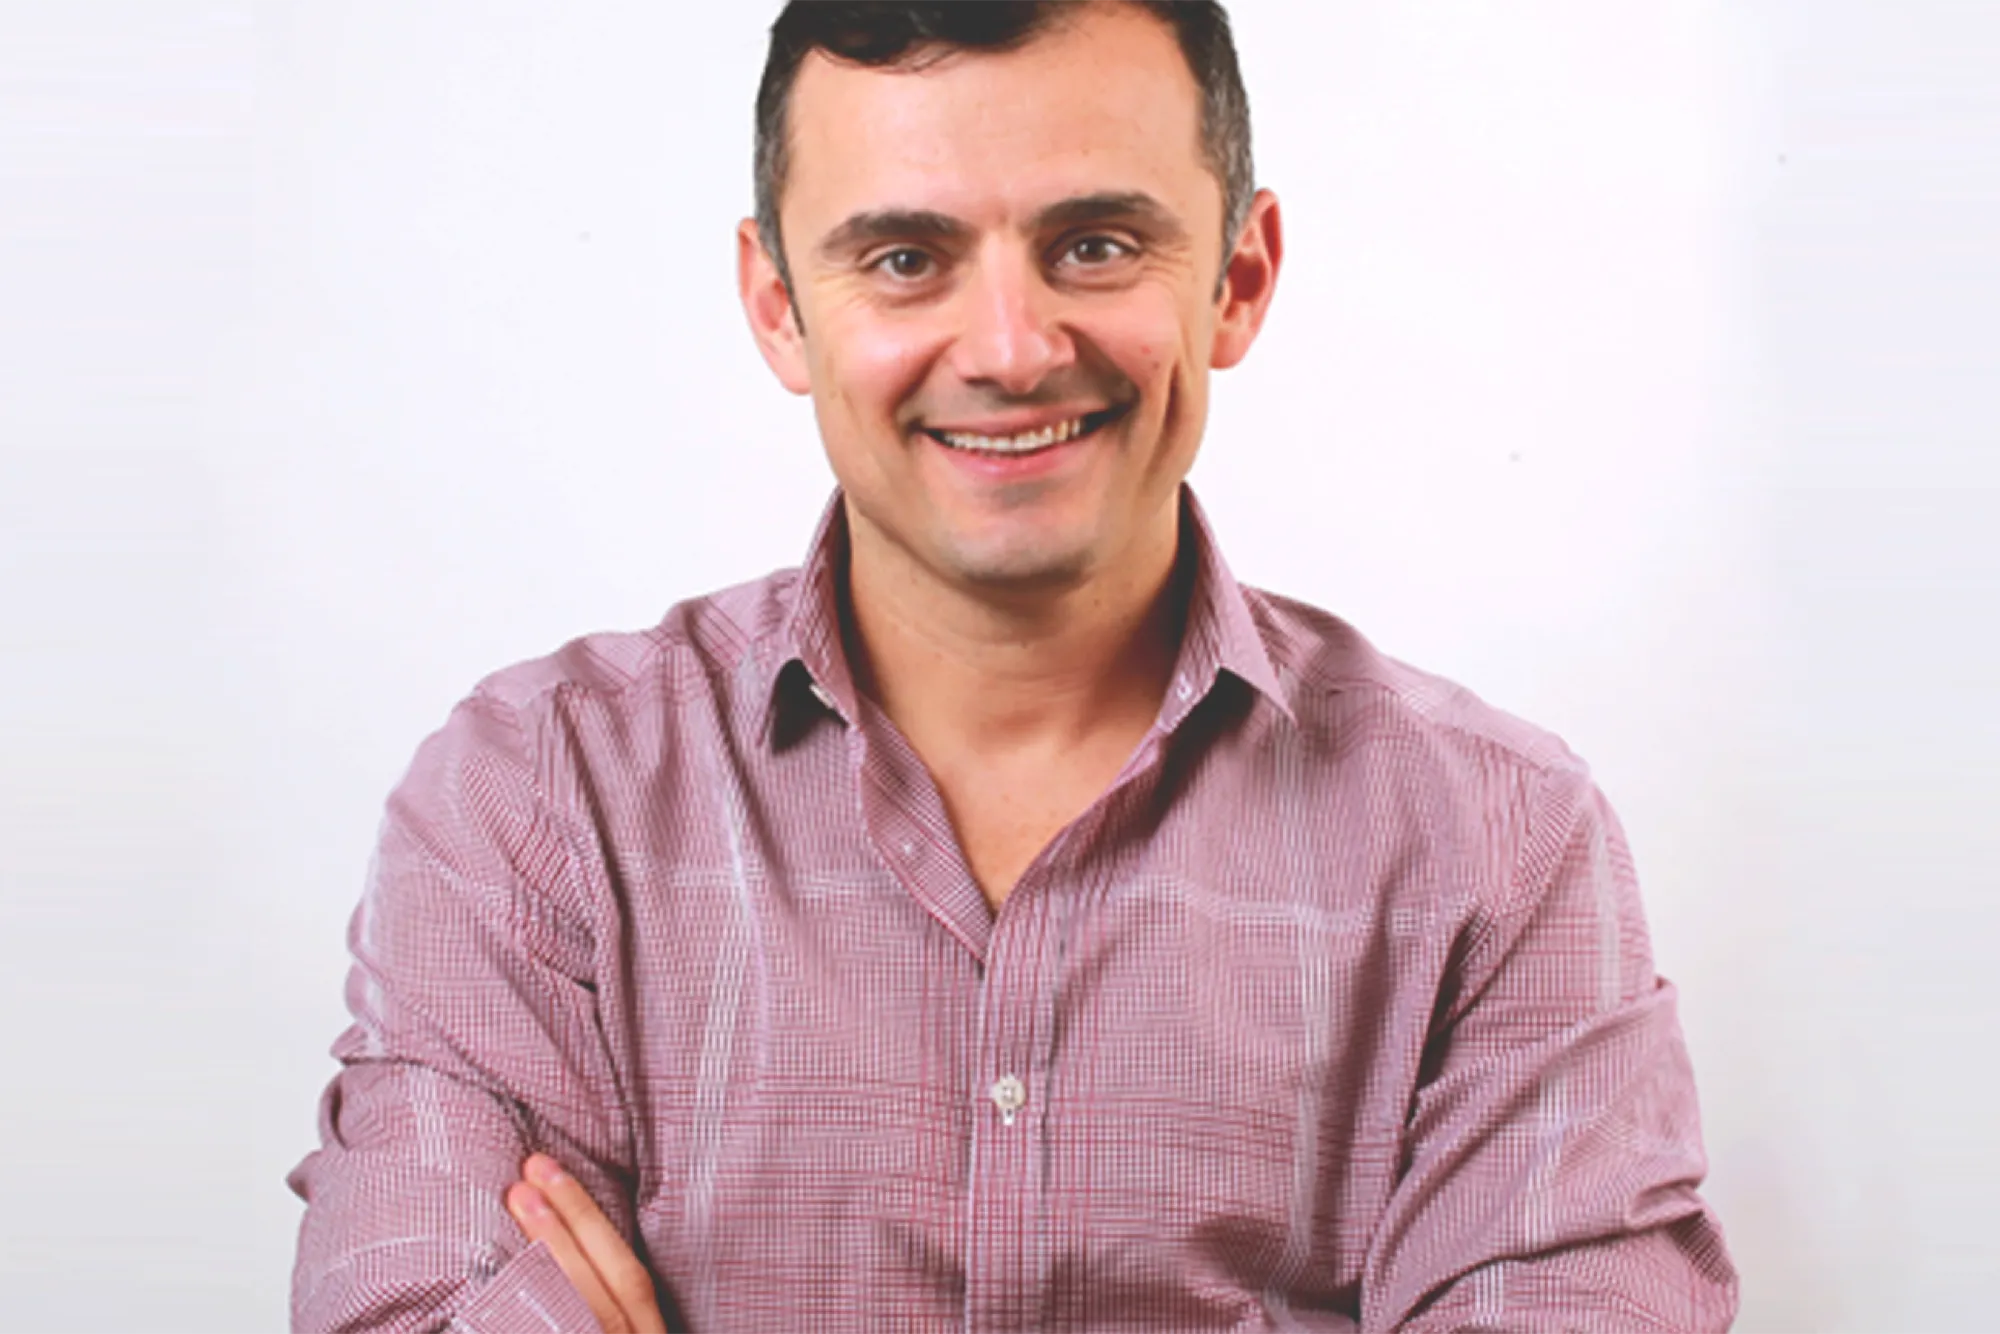 Personal Branding Specialist Gary Vaynerchuk 